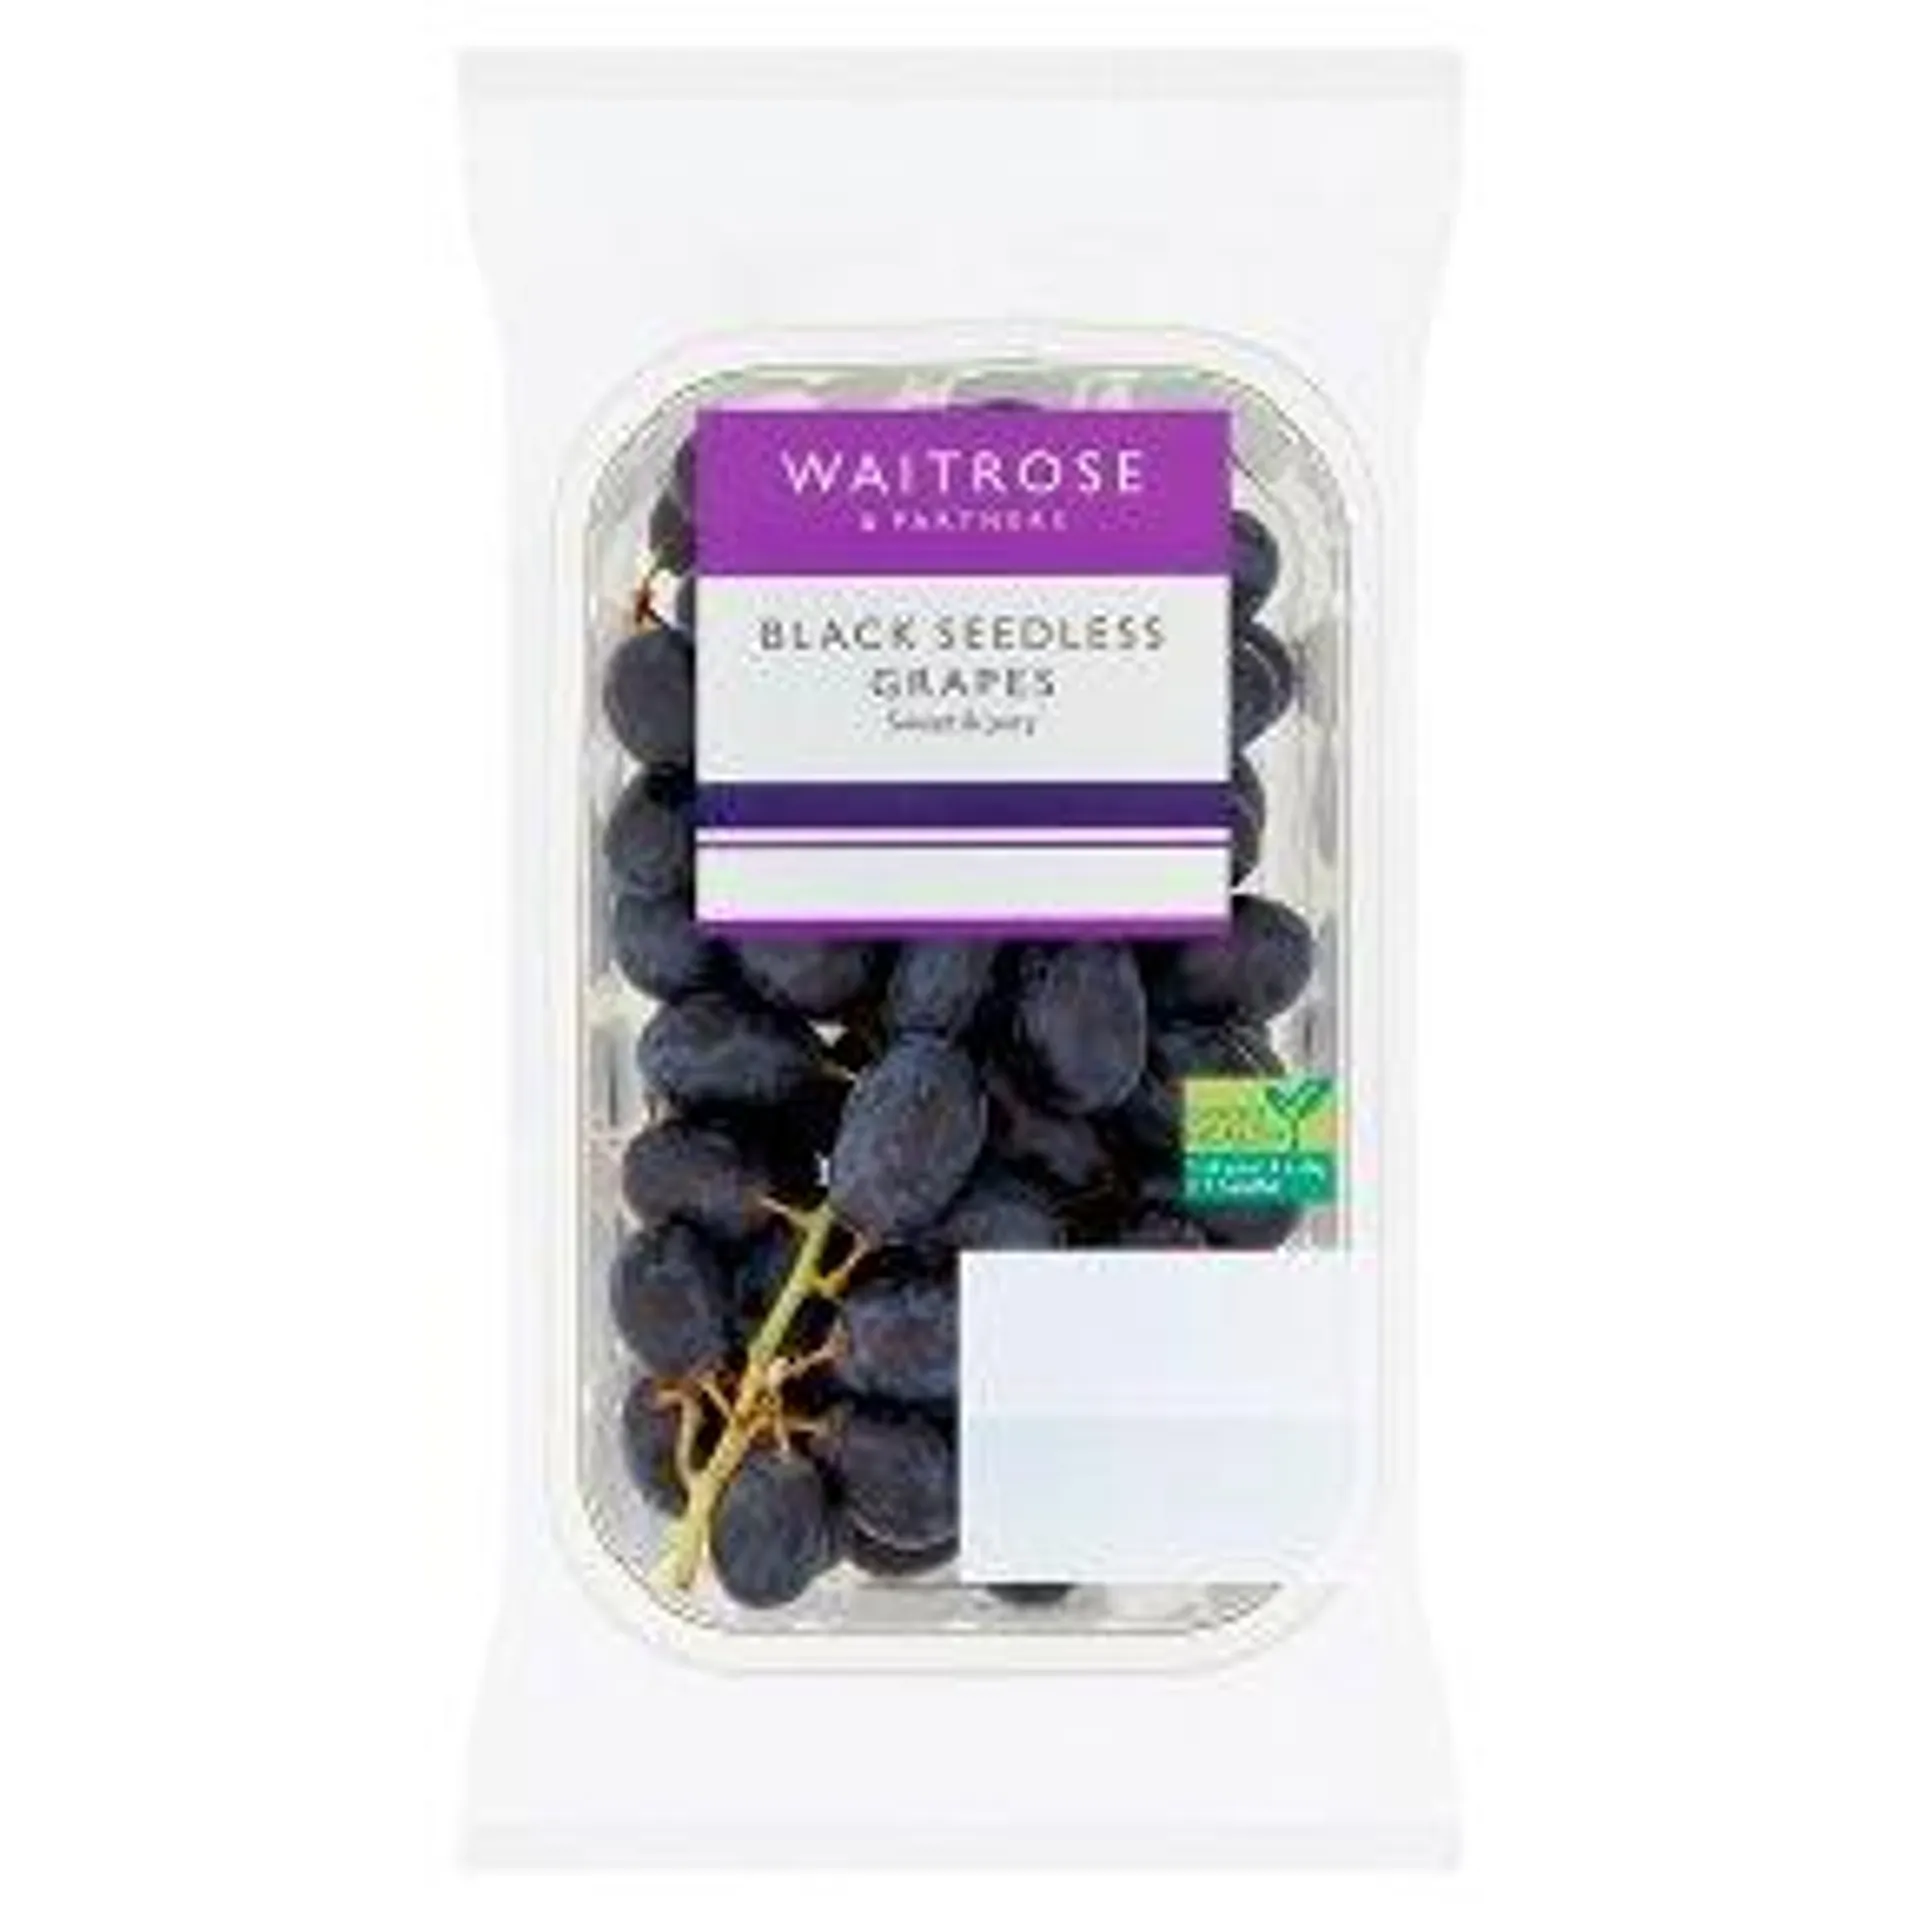 Waitrose Black Seedless Grapes